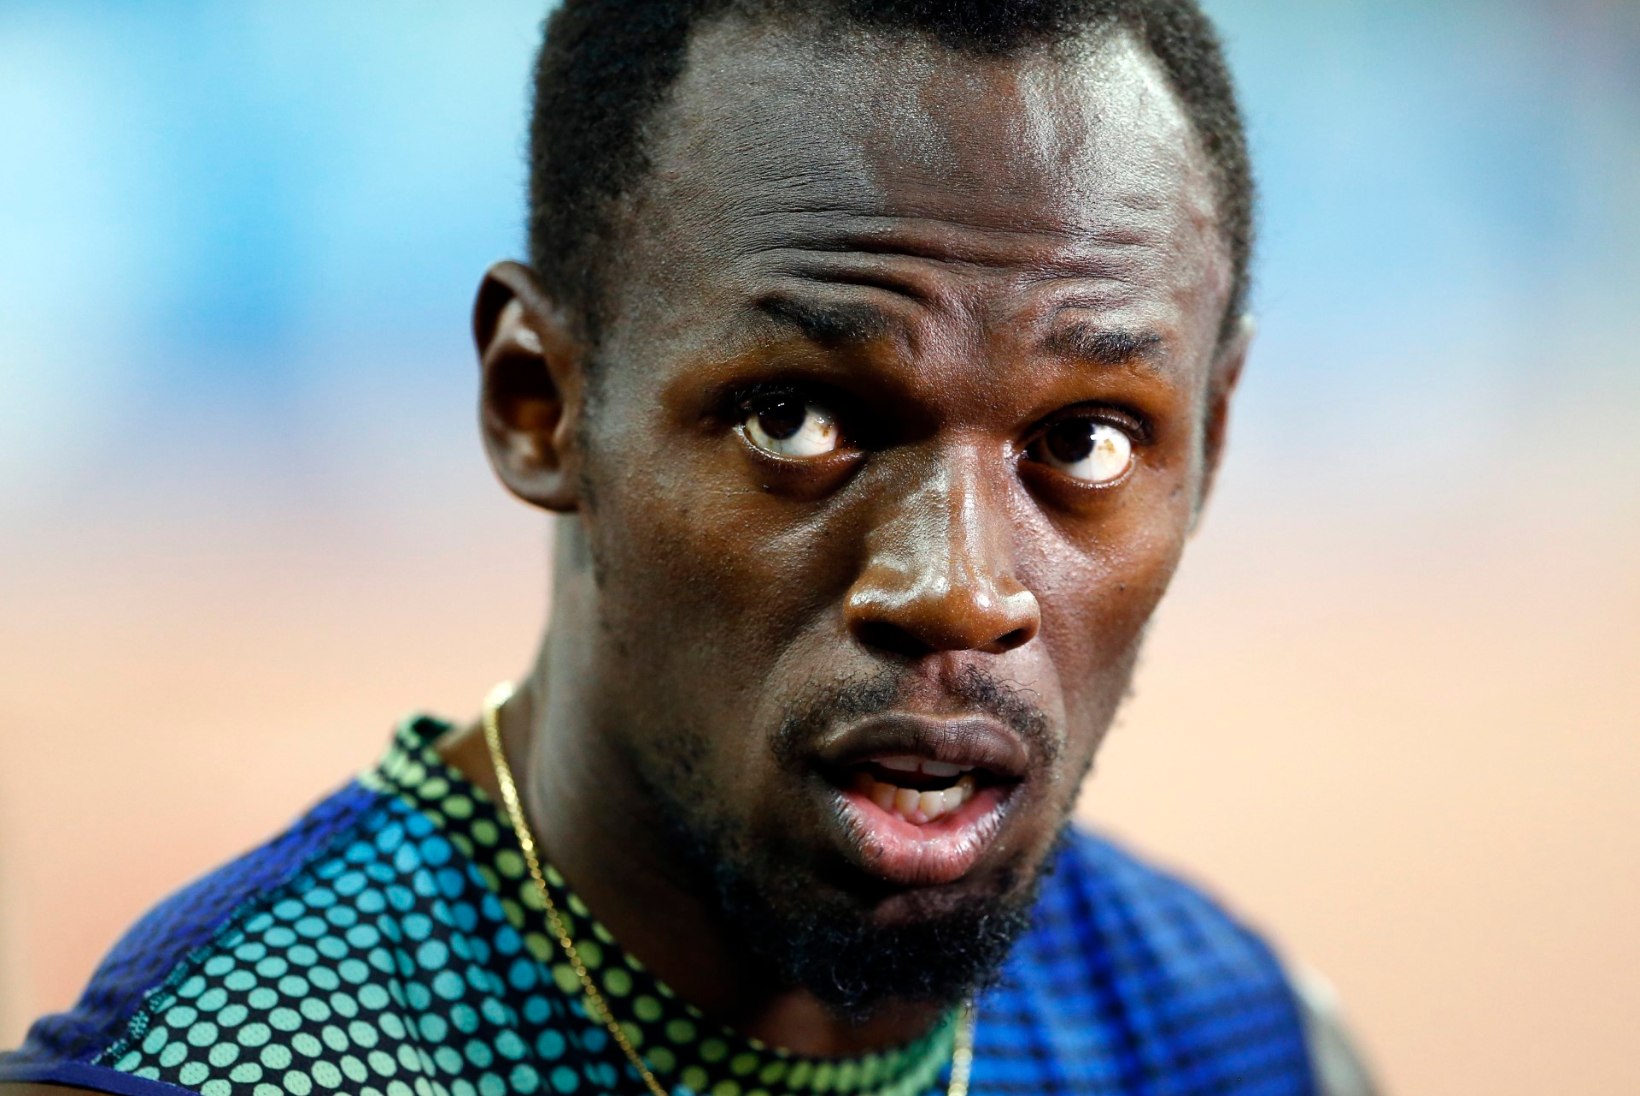 Kas Usain Boltist saab talisportlane?